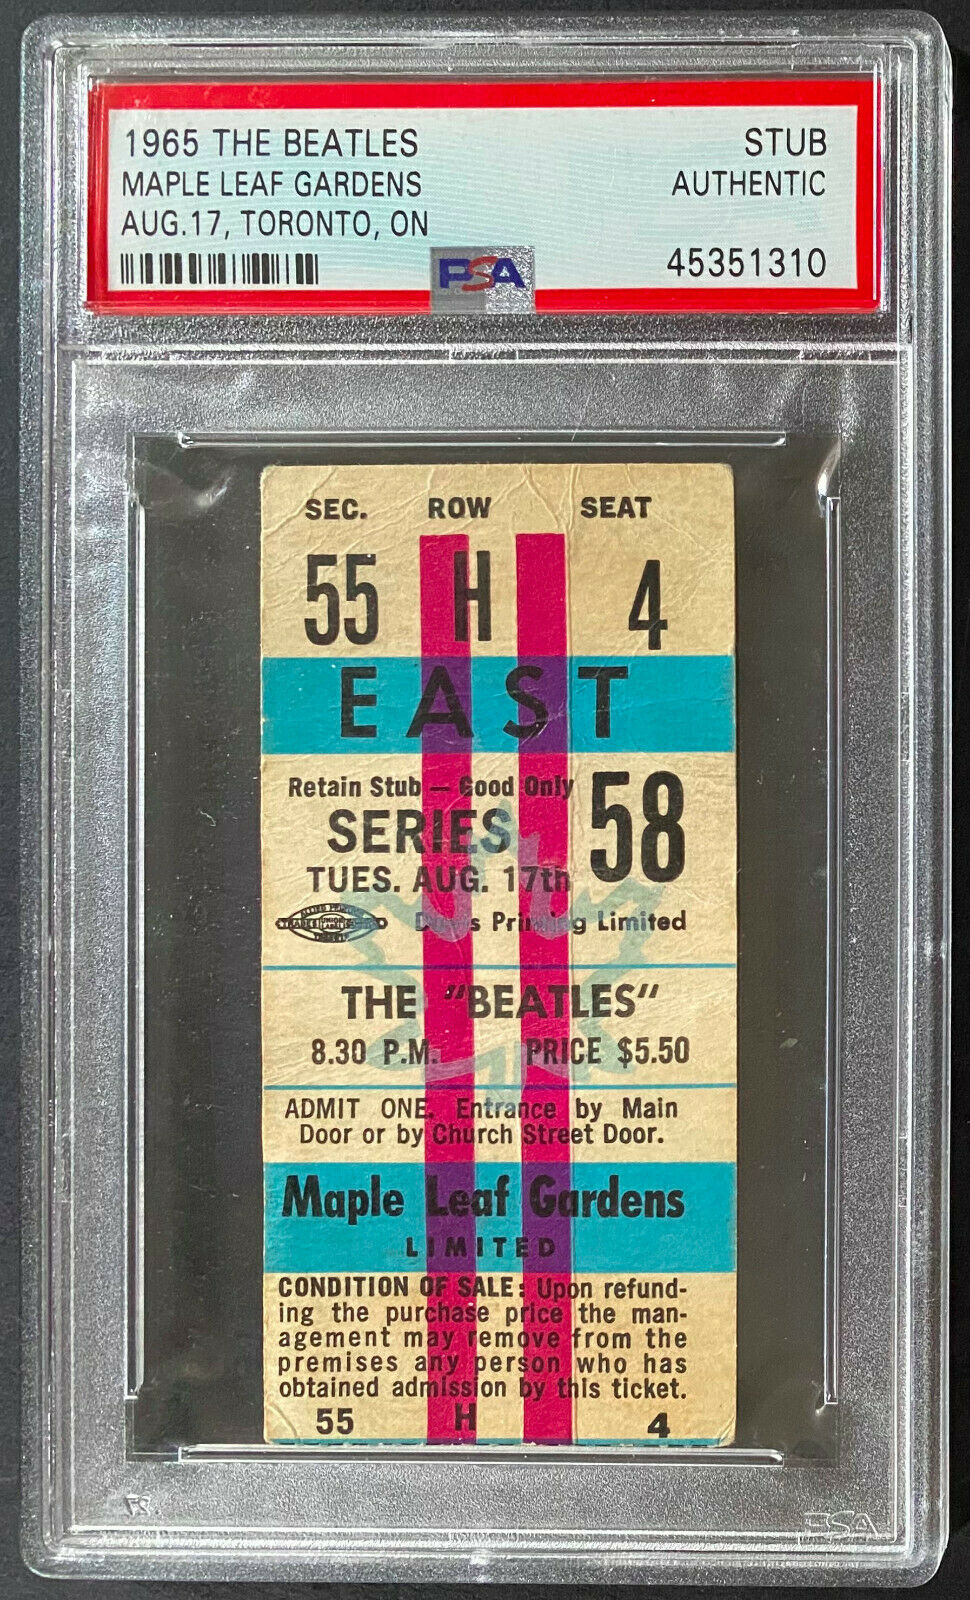 August 17th 1965 Maple Leaf Gardens The Beatles Full Unused Concert Ticket PSA